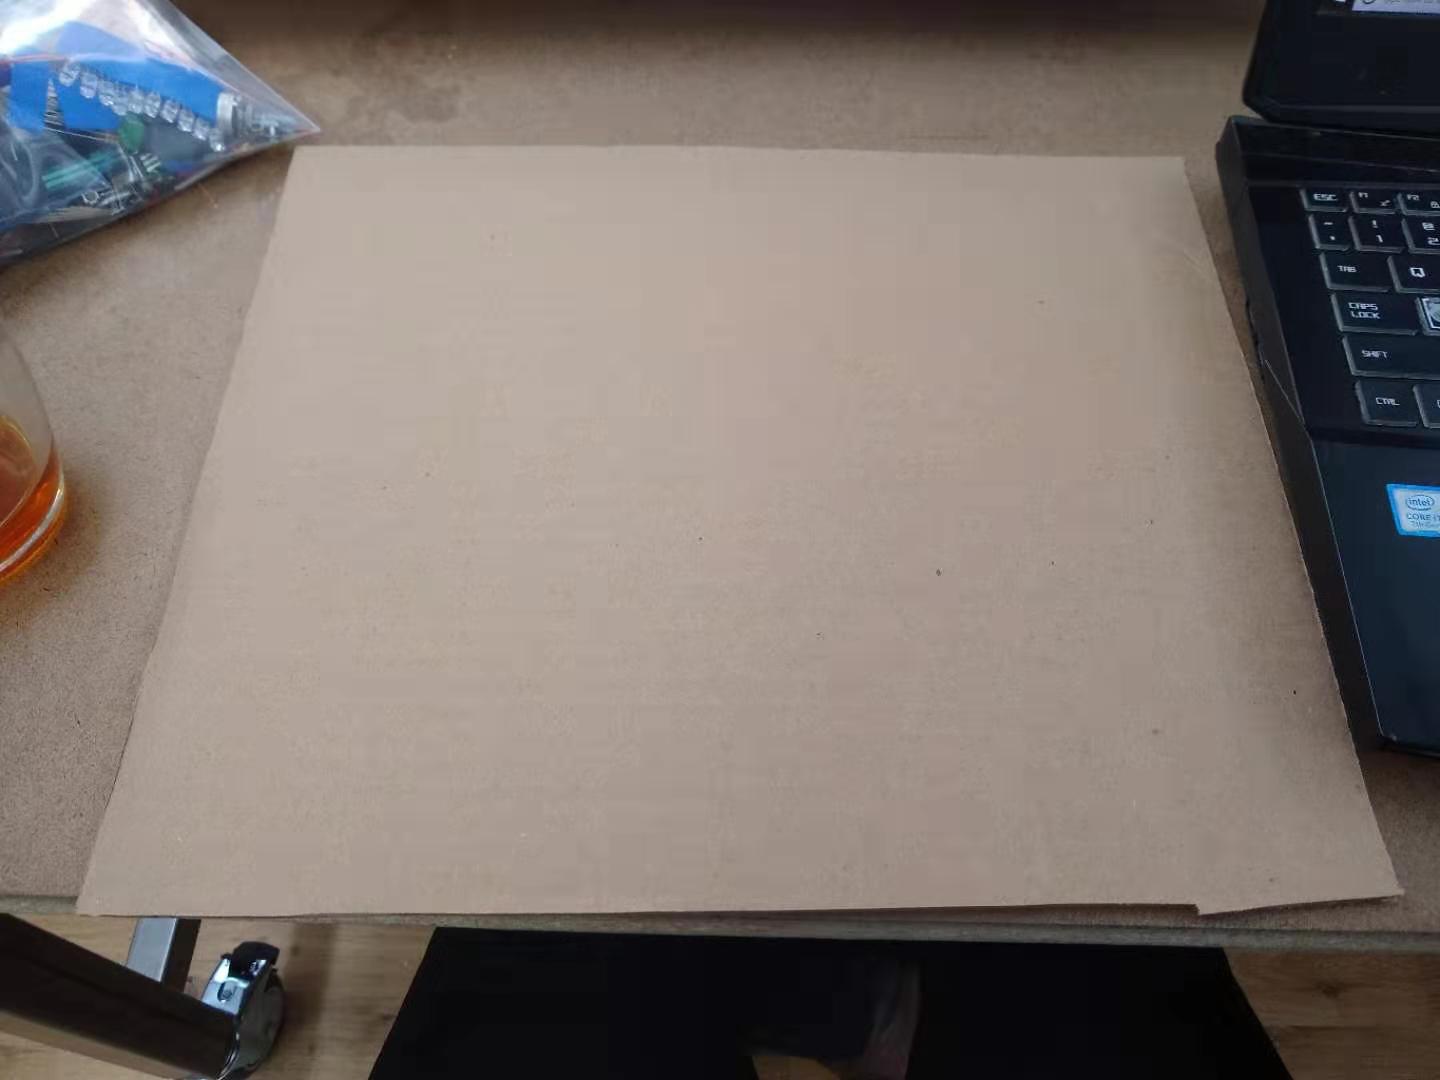 A piece of cardboard.